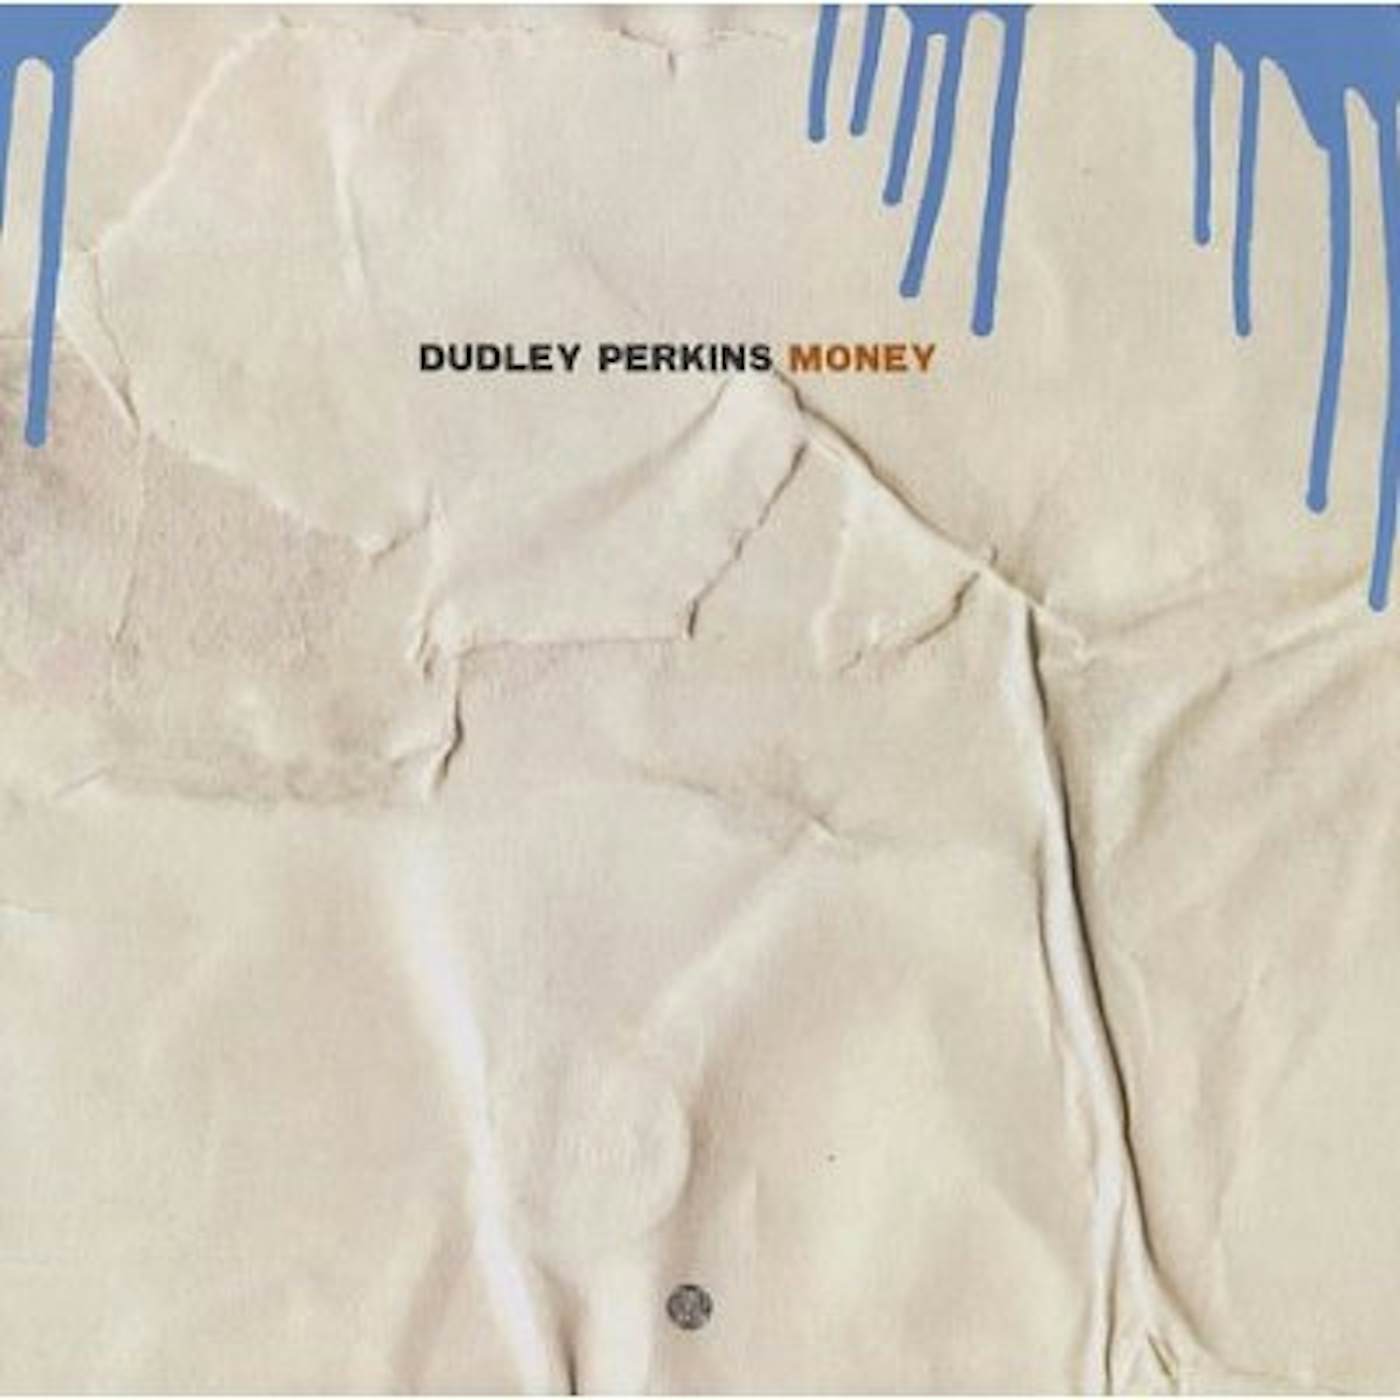 Dudley Perkins MONEY Vinyl Record